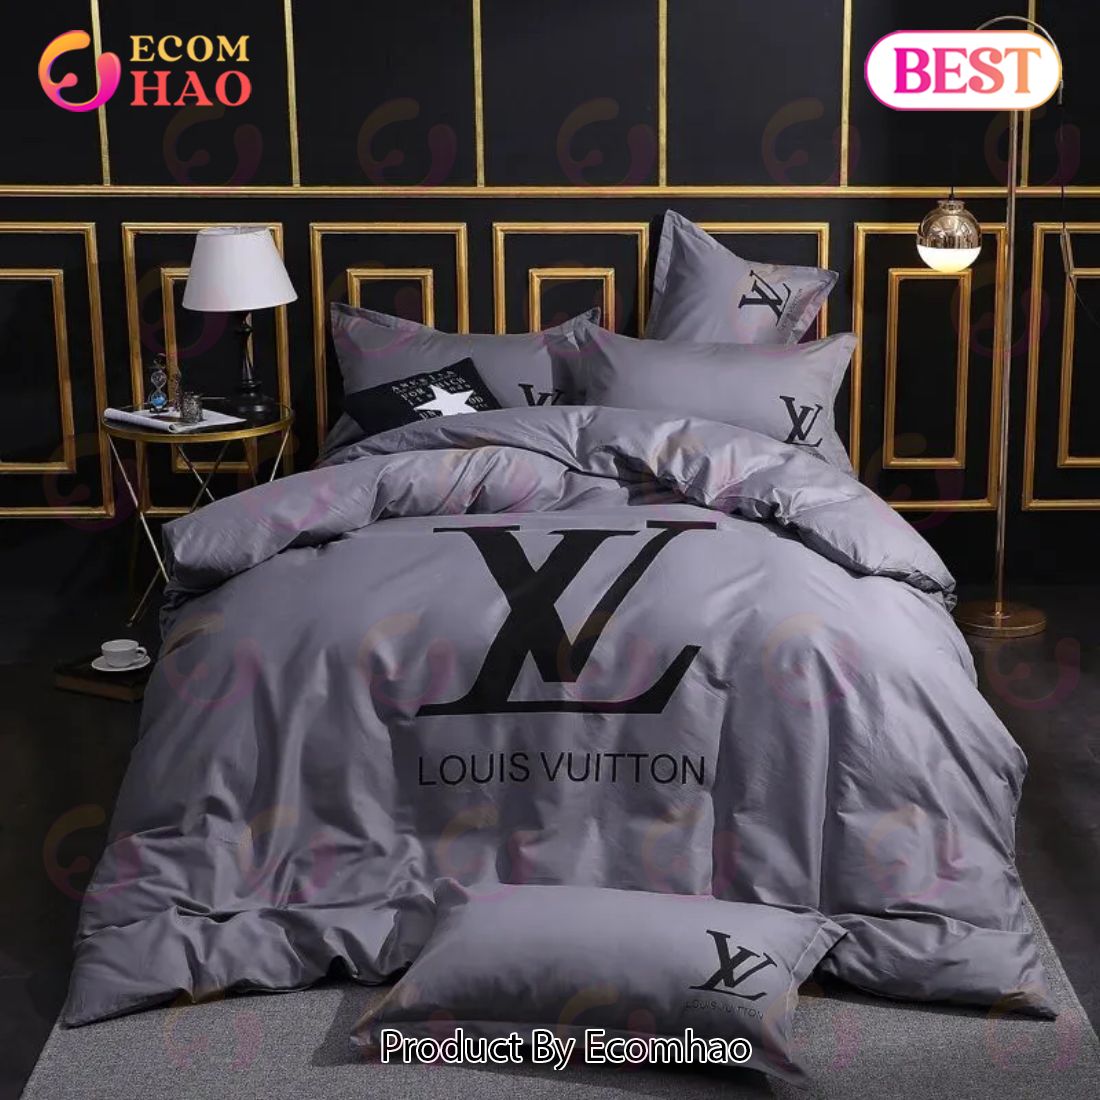 HOT Lola Bunny Supreme LV Luxury Brand Bedding Sets